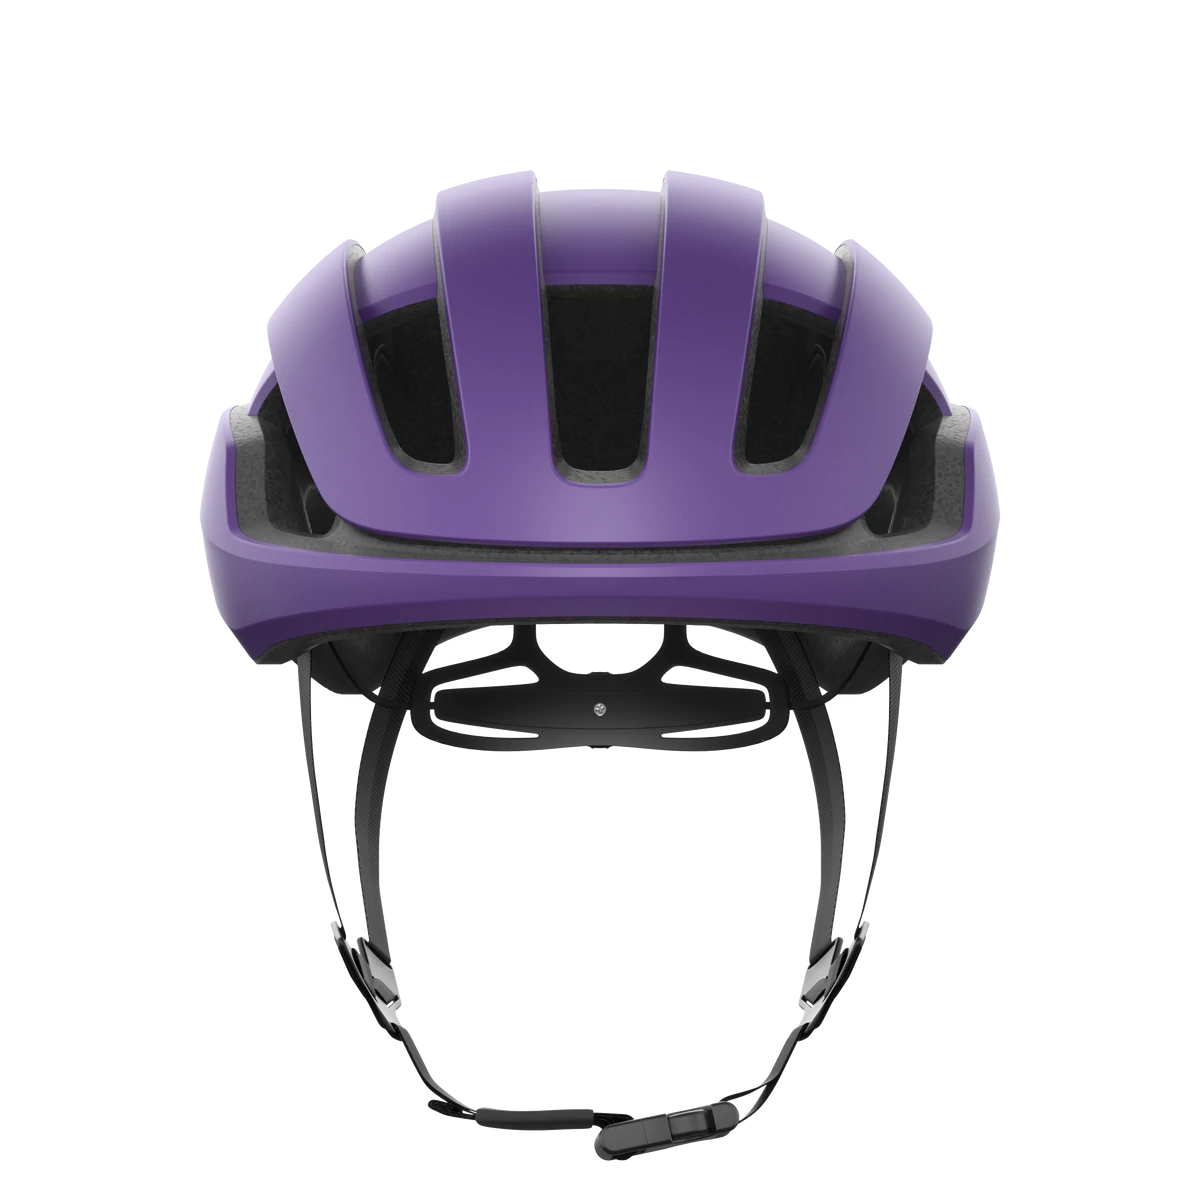 JCF公認ロードバイク用ヘルメット 10772-1613 オムネエアミップス アジアンフィット Omne Air Wf Mips Asian-fit - Sapphire Purple Matt [ユニセックス]